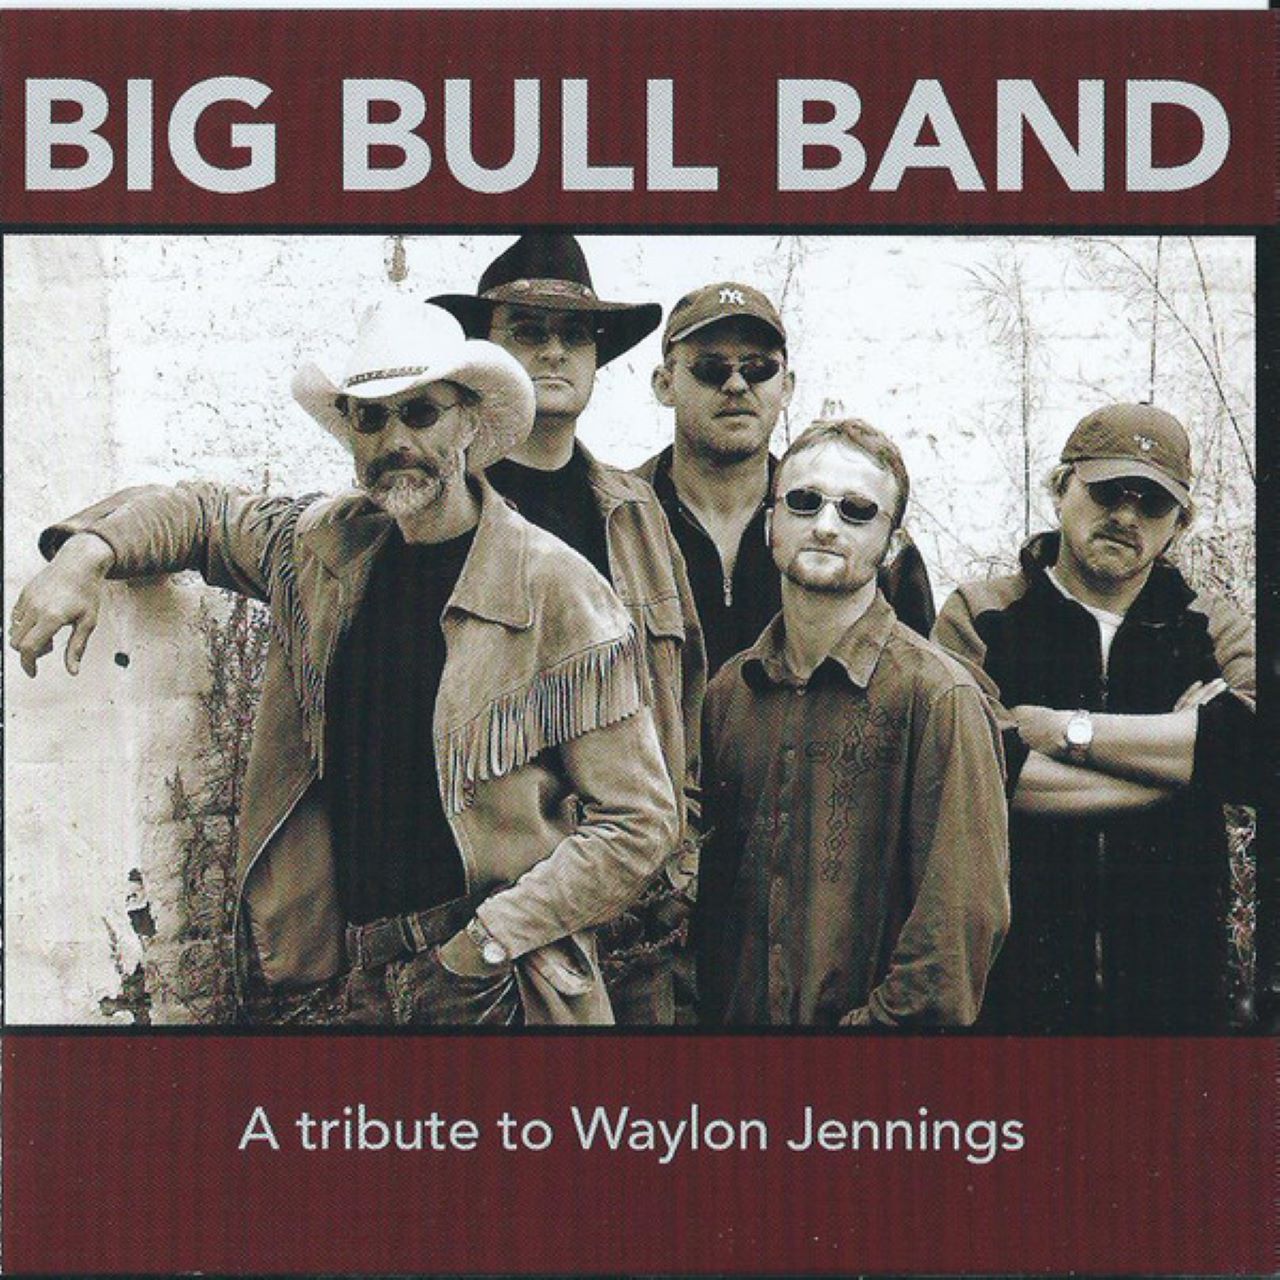 Big Bull Band - A Tribute To Waylon Jennings cover album